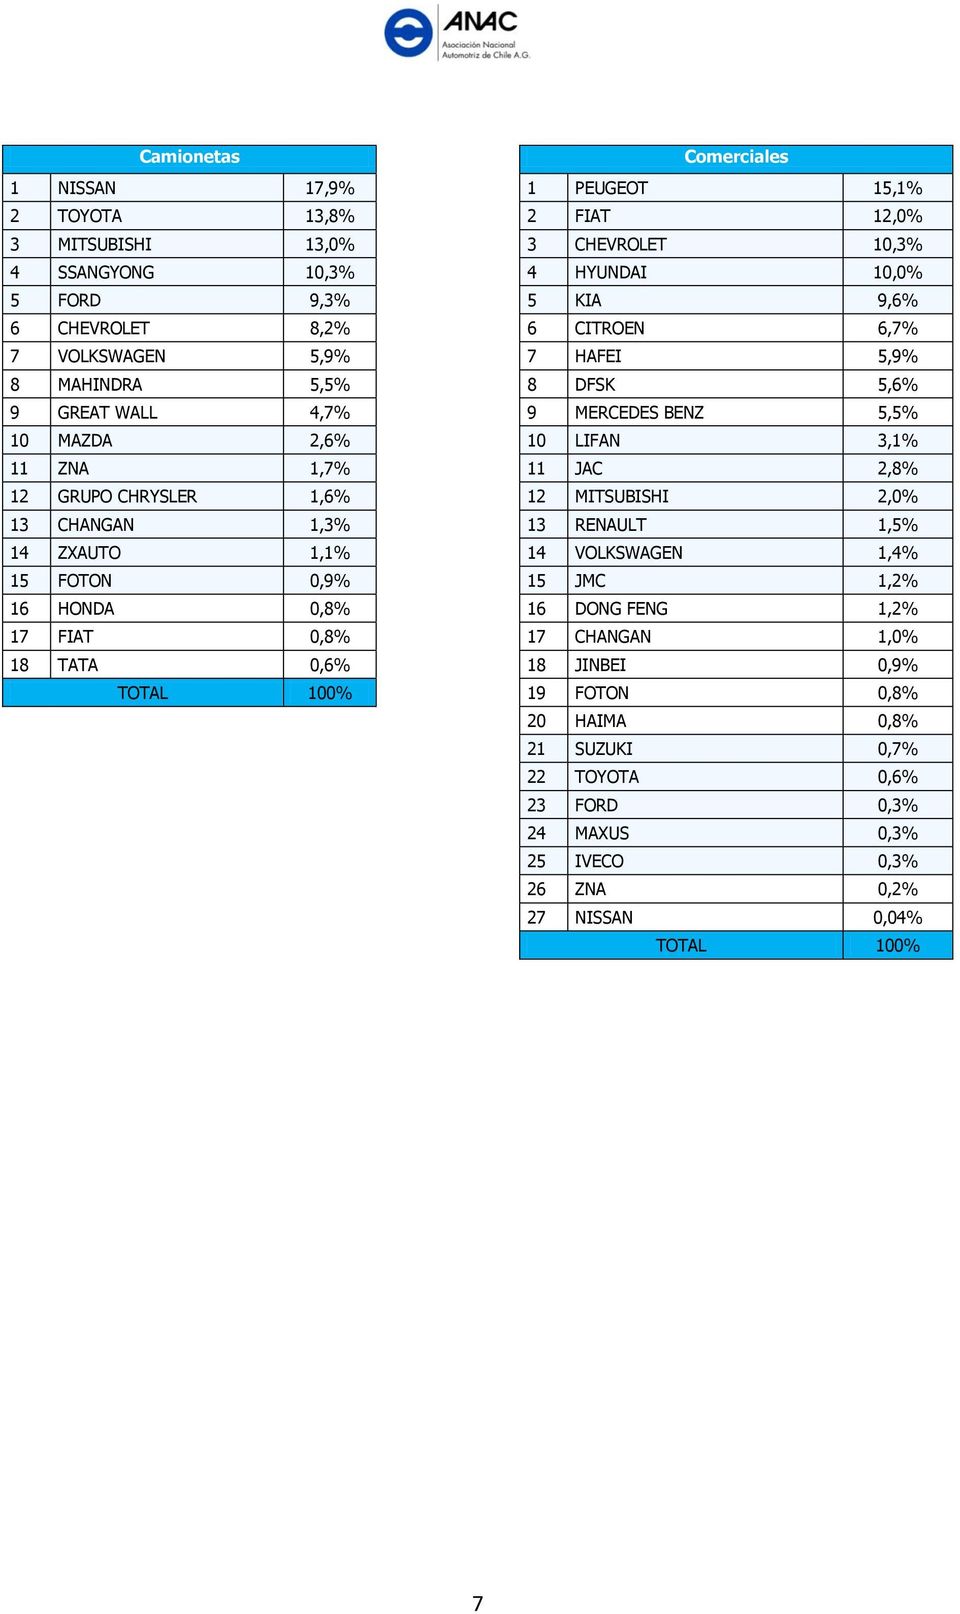 GRUPO CHRYSLER 1,6% 12 MITSUBISHI 2,0% 13 CHANGAN 1,3% 13 RENAULT 1,5% 14 ZXAUTO 1,1% 14 VOLKSWAGEN 1,4% 15 FOTON 0,9% 15 JMC 1,2% 16 HONDA 0,8% 16 DONG FENG 1,2% 17 FIAT 0,8% 17